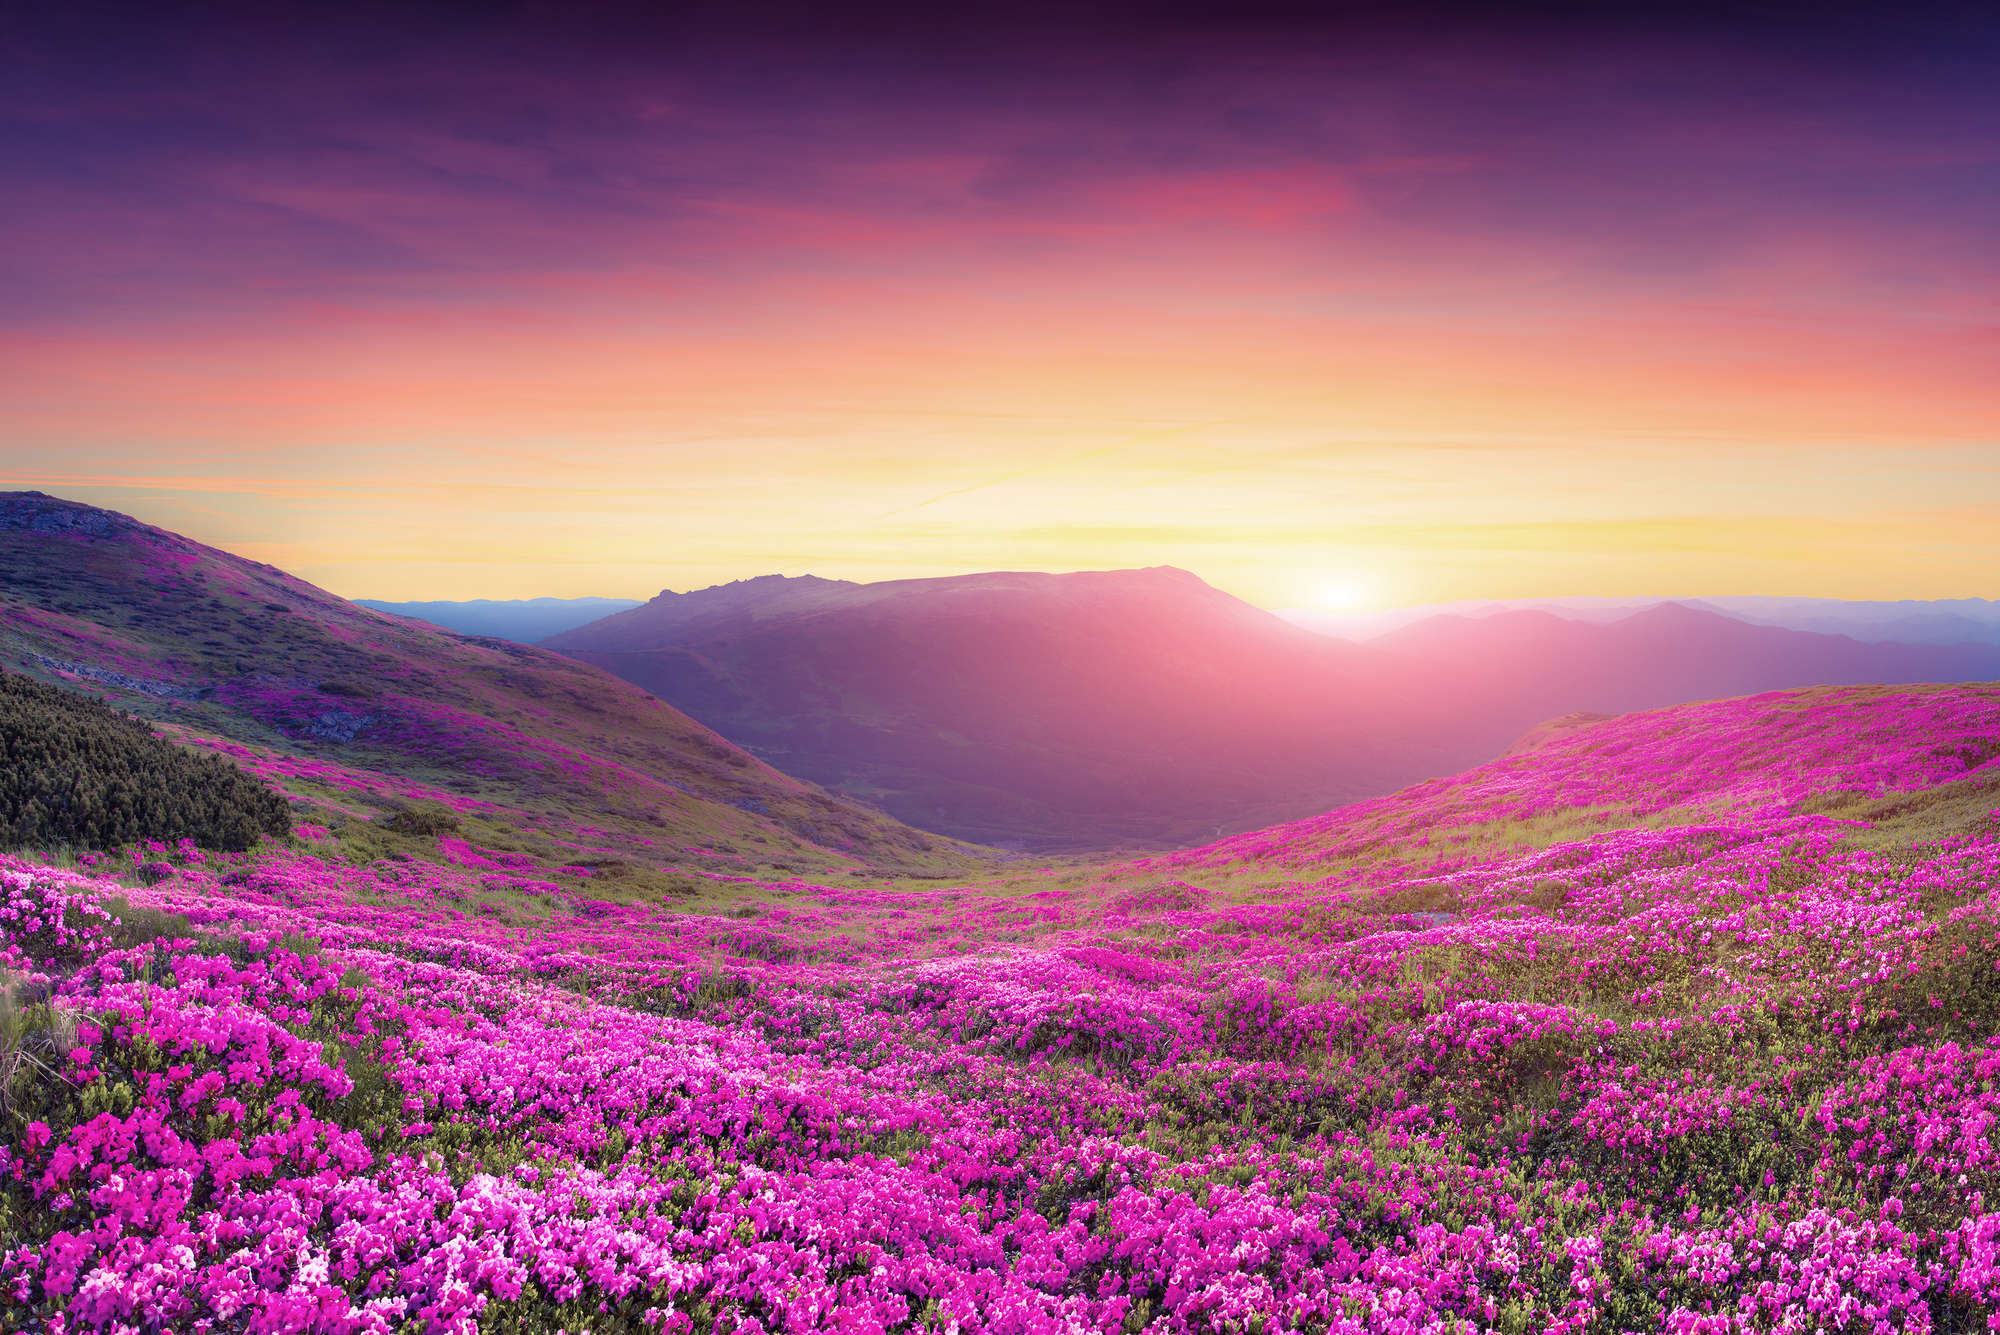             Papel pintado Naturaleza Pradera de flores en las montañas sobre vellón liso de primera calidad
        